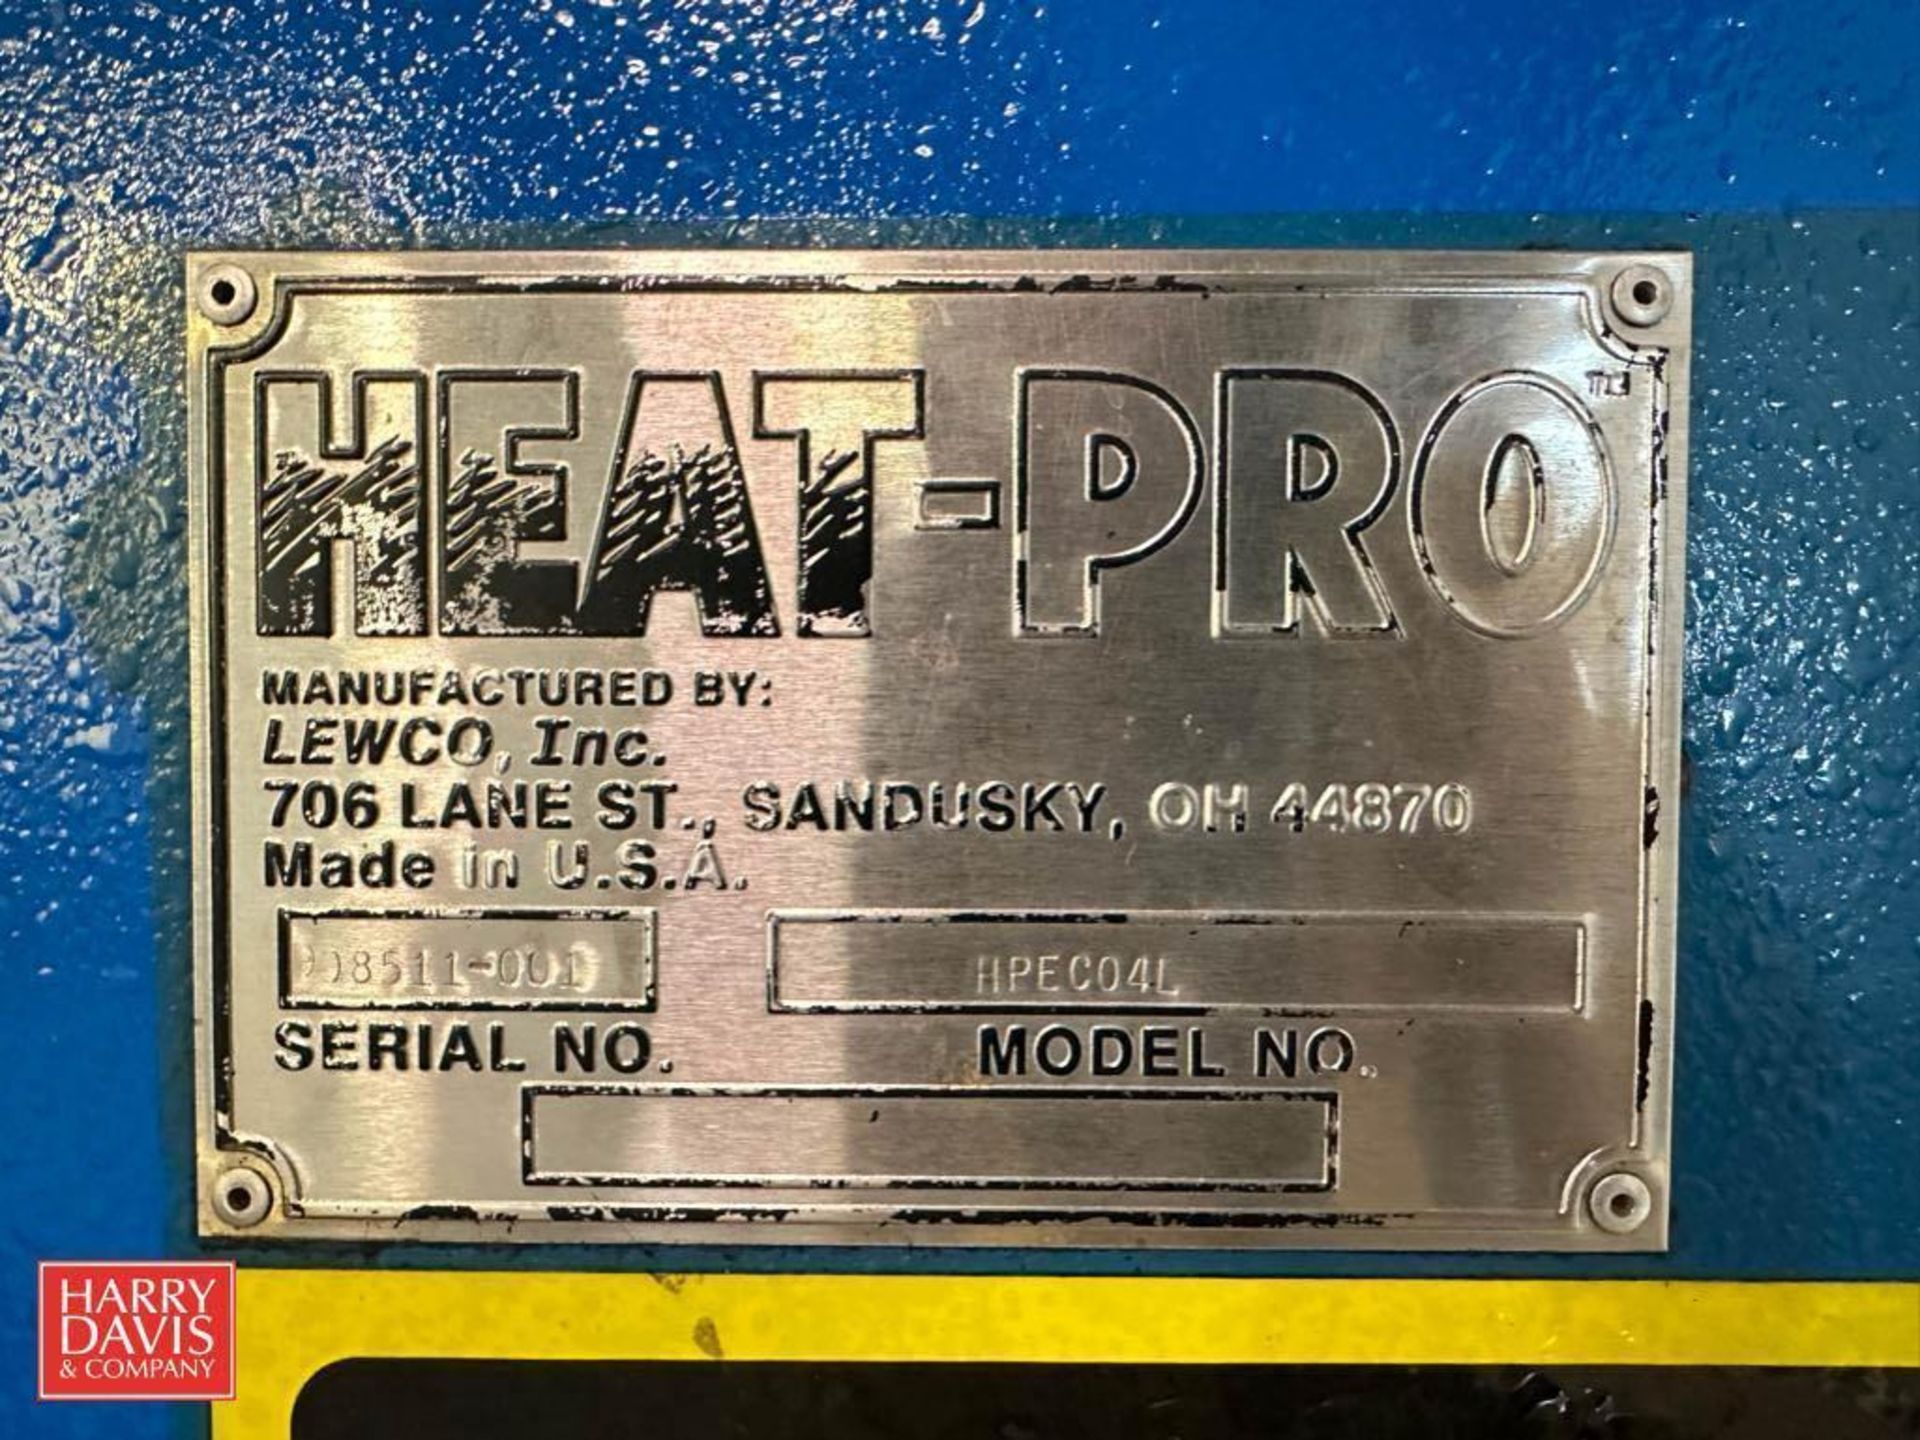 Heat-Pro Hot Box, Model: HPEC04L, S/N: 08511-001 - Rigging Fee: $200 - Image 2 of 2